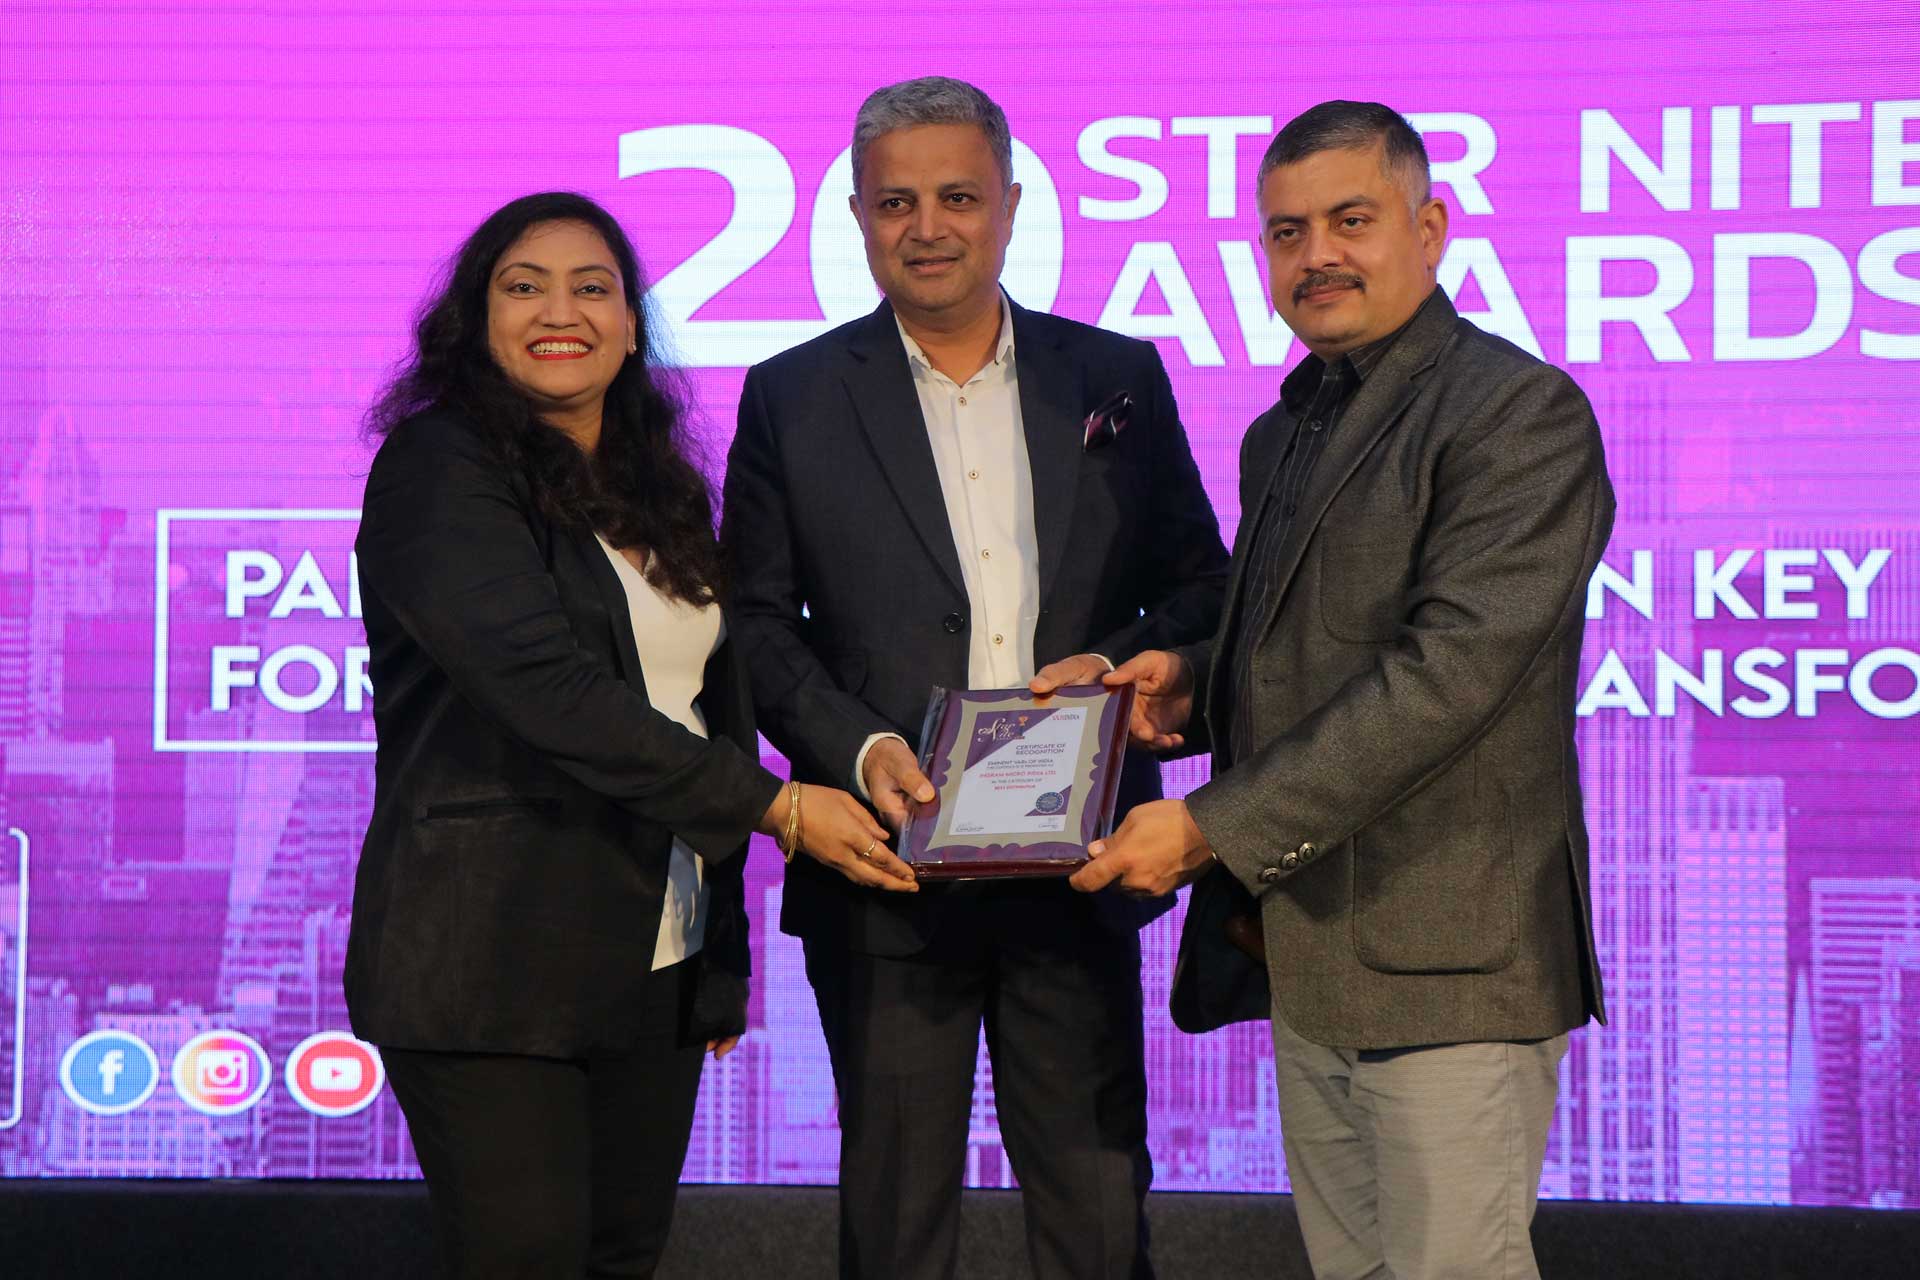 Best Distributor  Award goes to Ingram Micro India Ltd. at 20th Star Nite Awards 2021